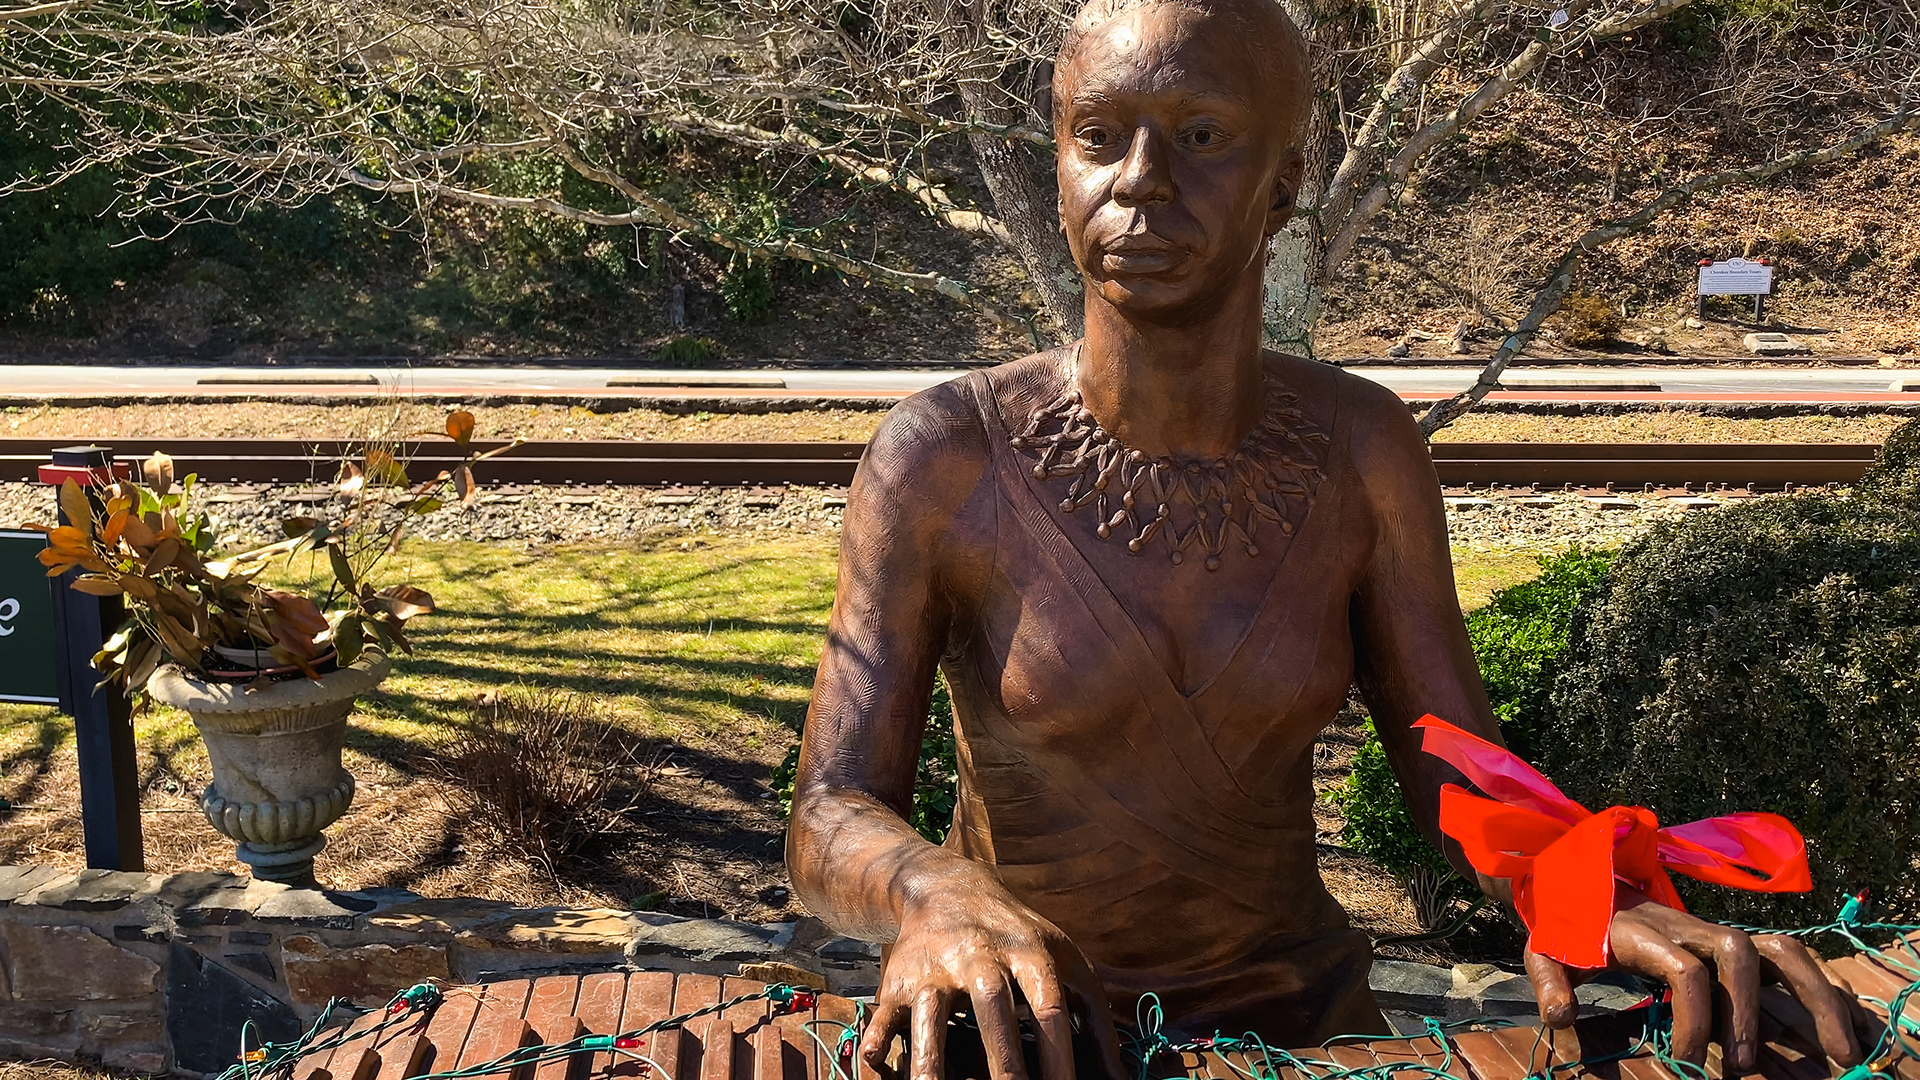 the statue of Nina Simone at Nina Simone Plaza in Tryon, North Carolina